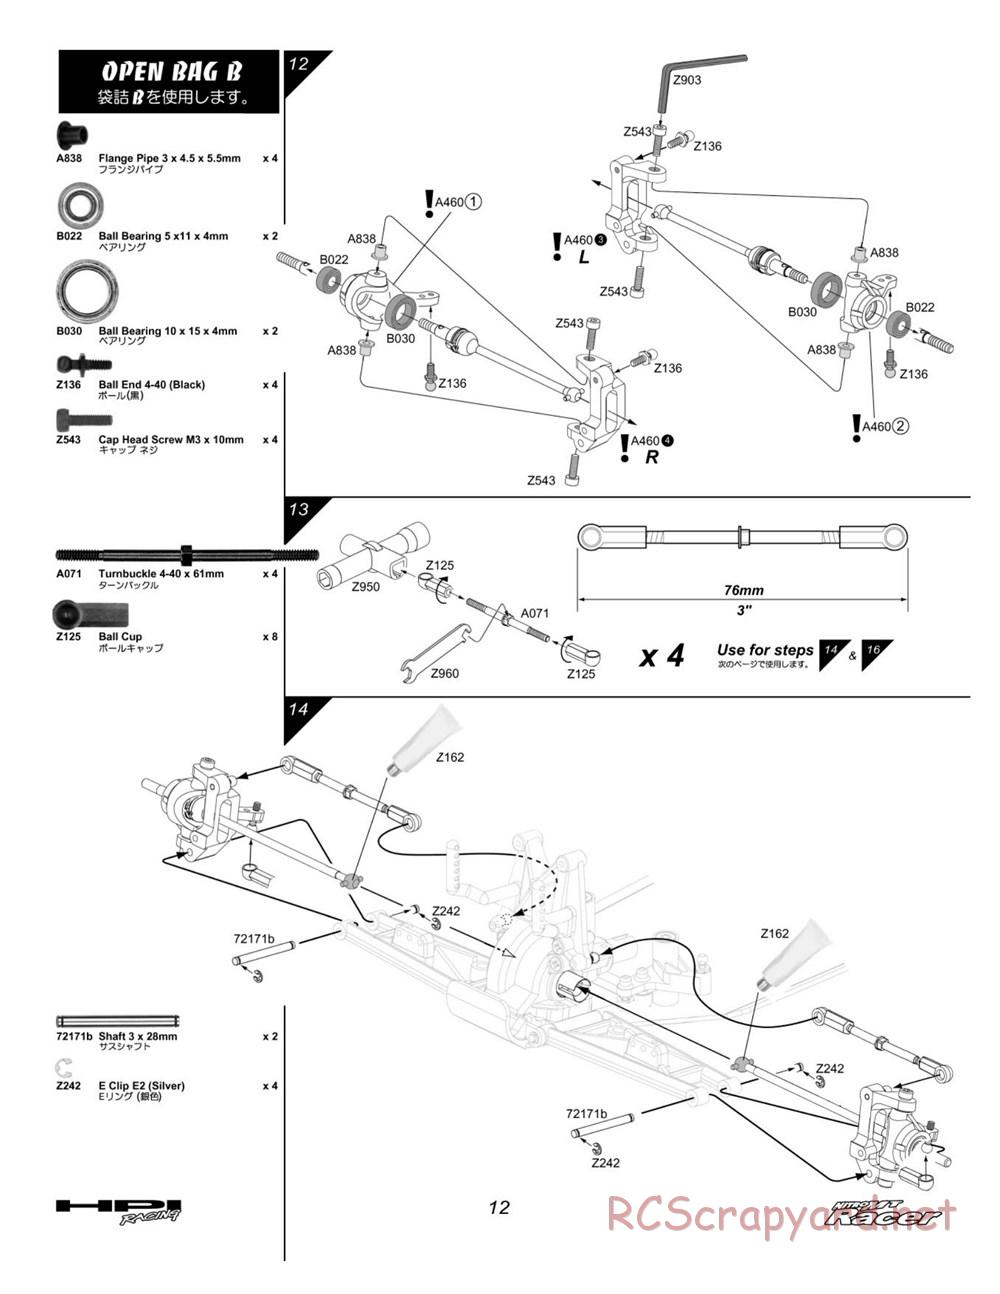 HPI - Nitro MT Racer - Manual - Page 12